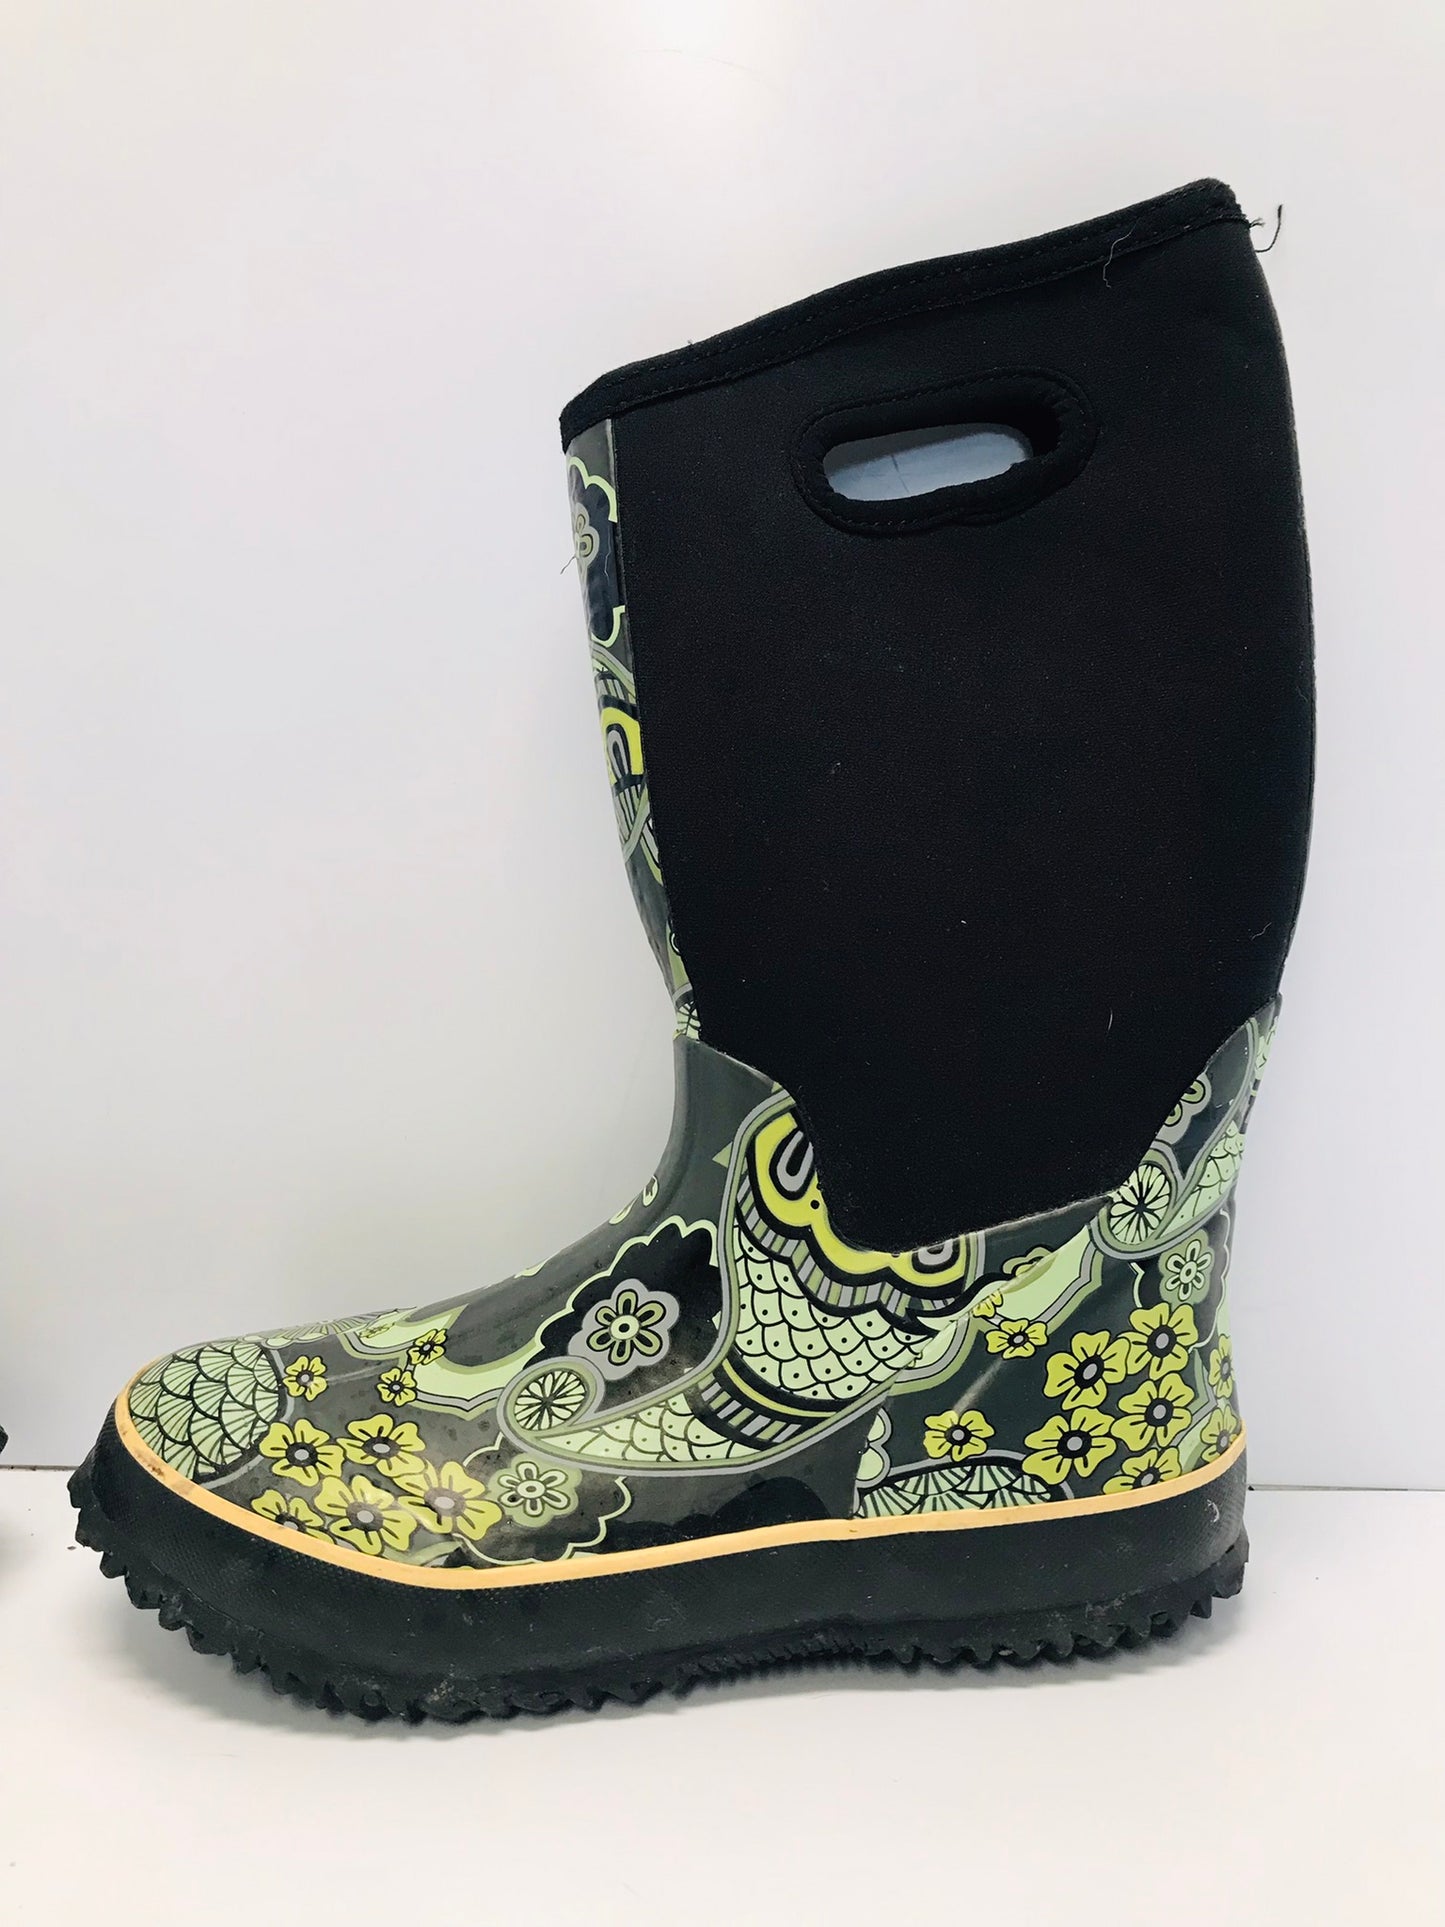 Winter Boots Rain Boots Bogs Style Women's  Size 6 Neoprene Black Lime